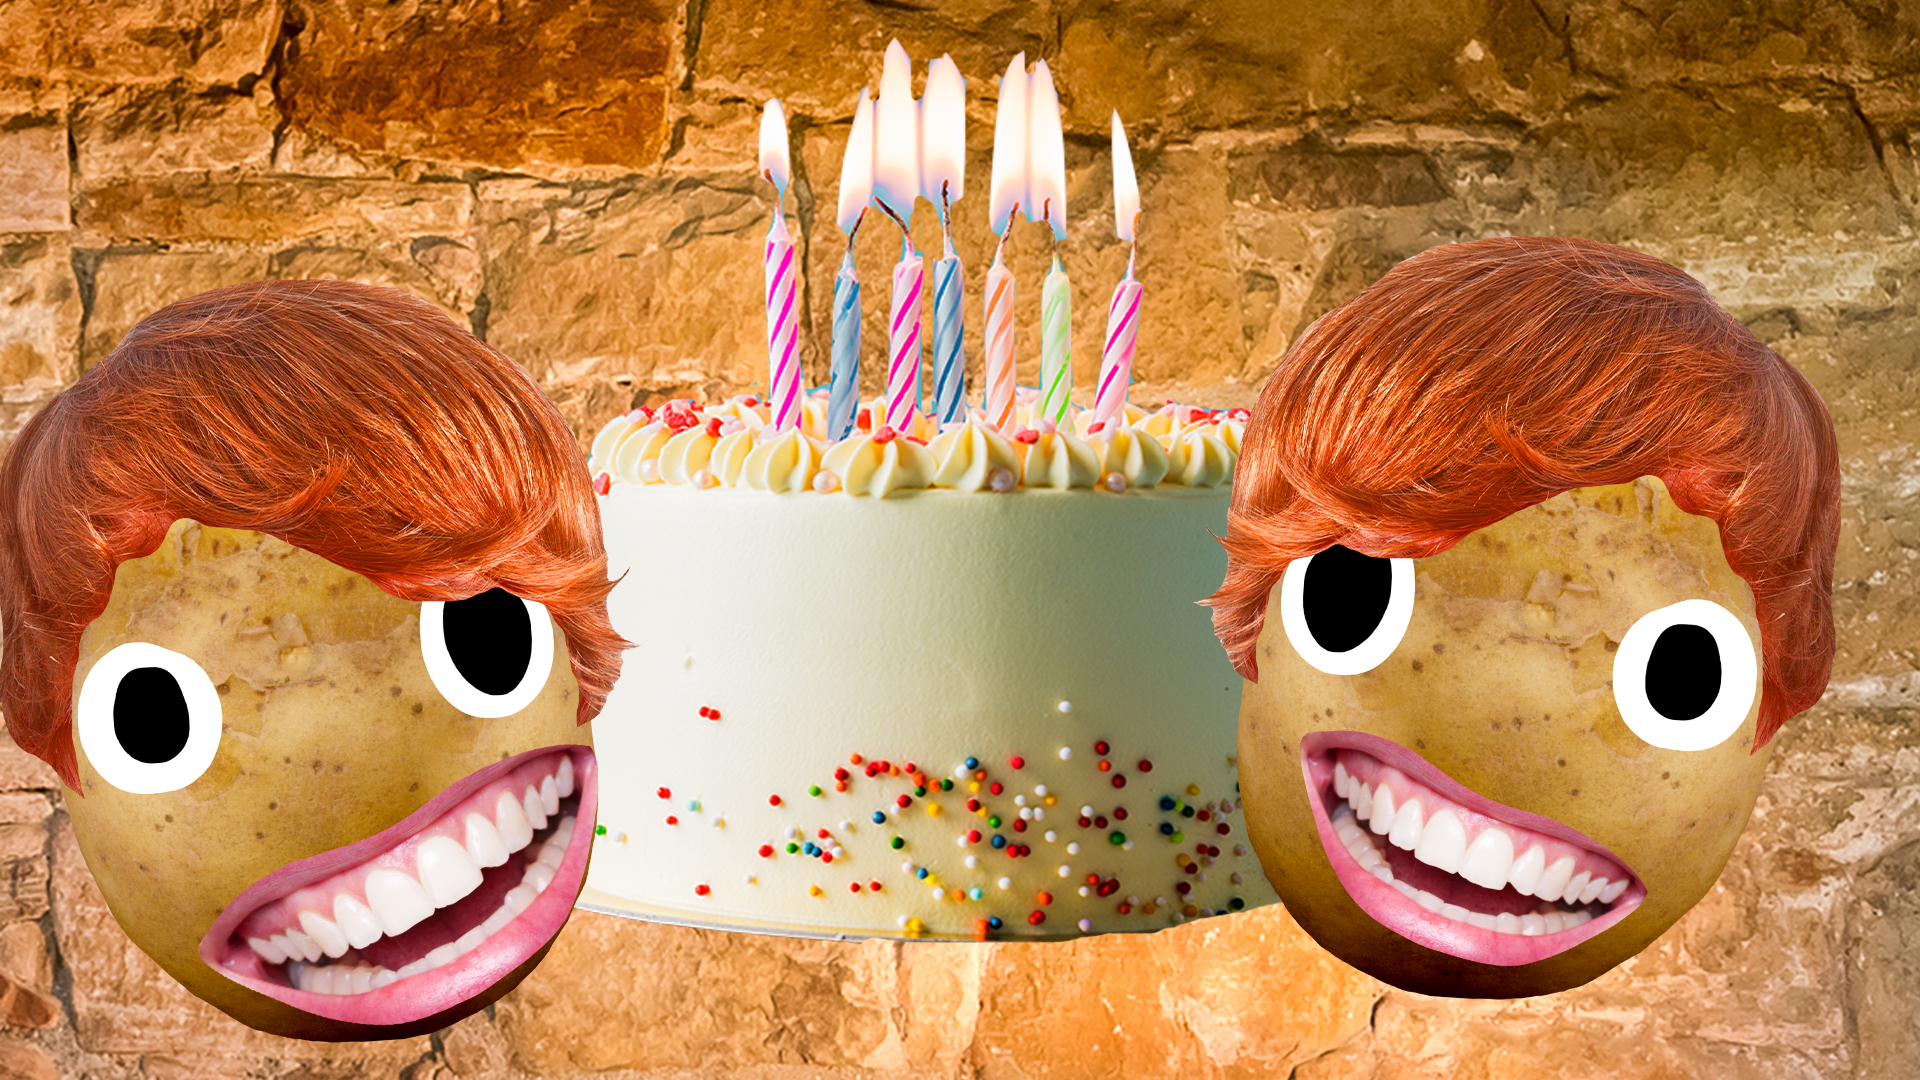 Weasley twin potatoes on stone background with birthday cake 